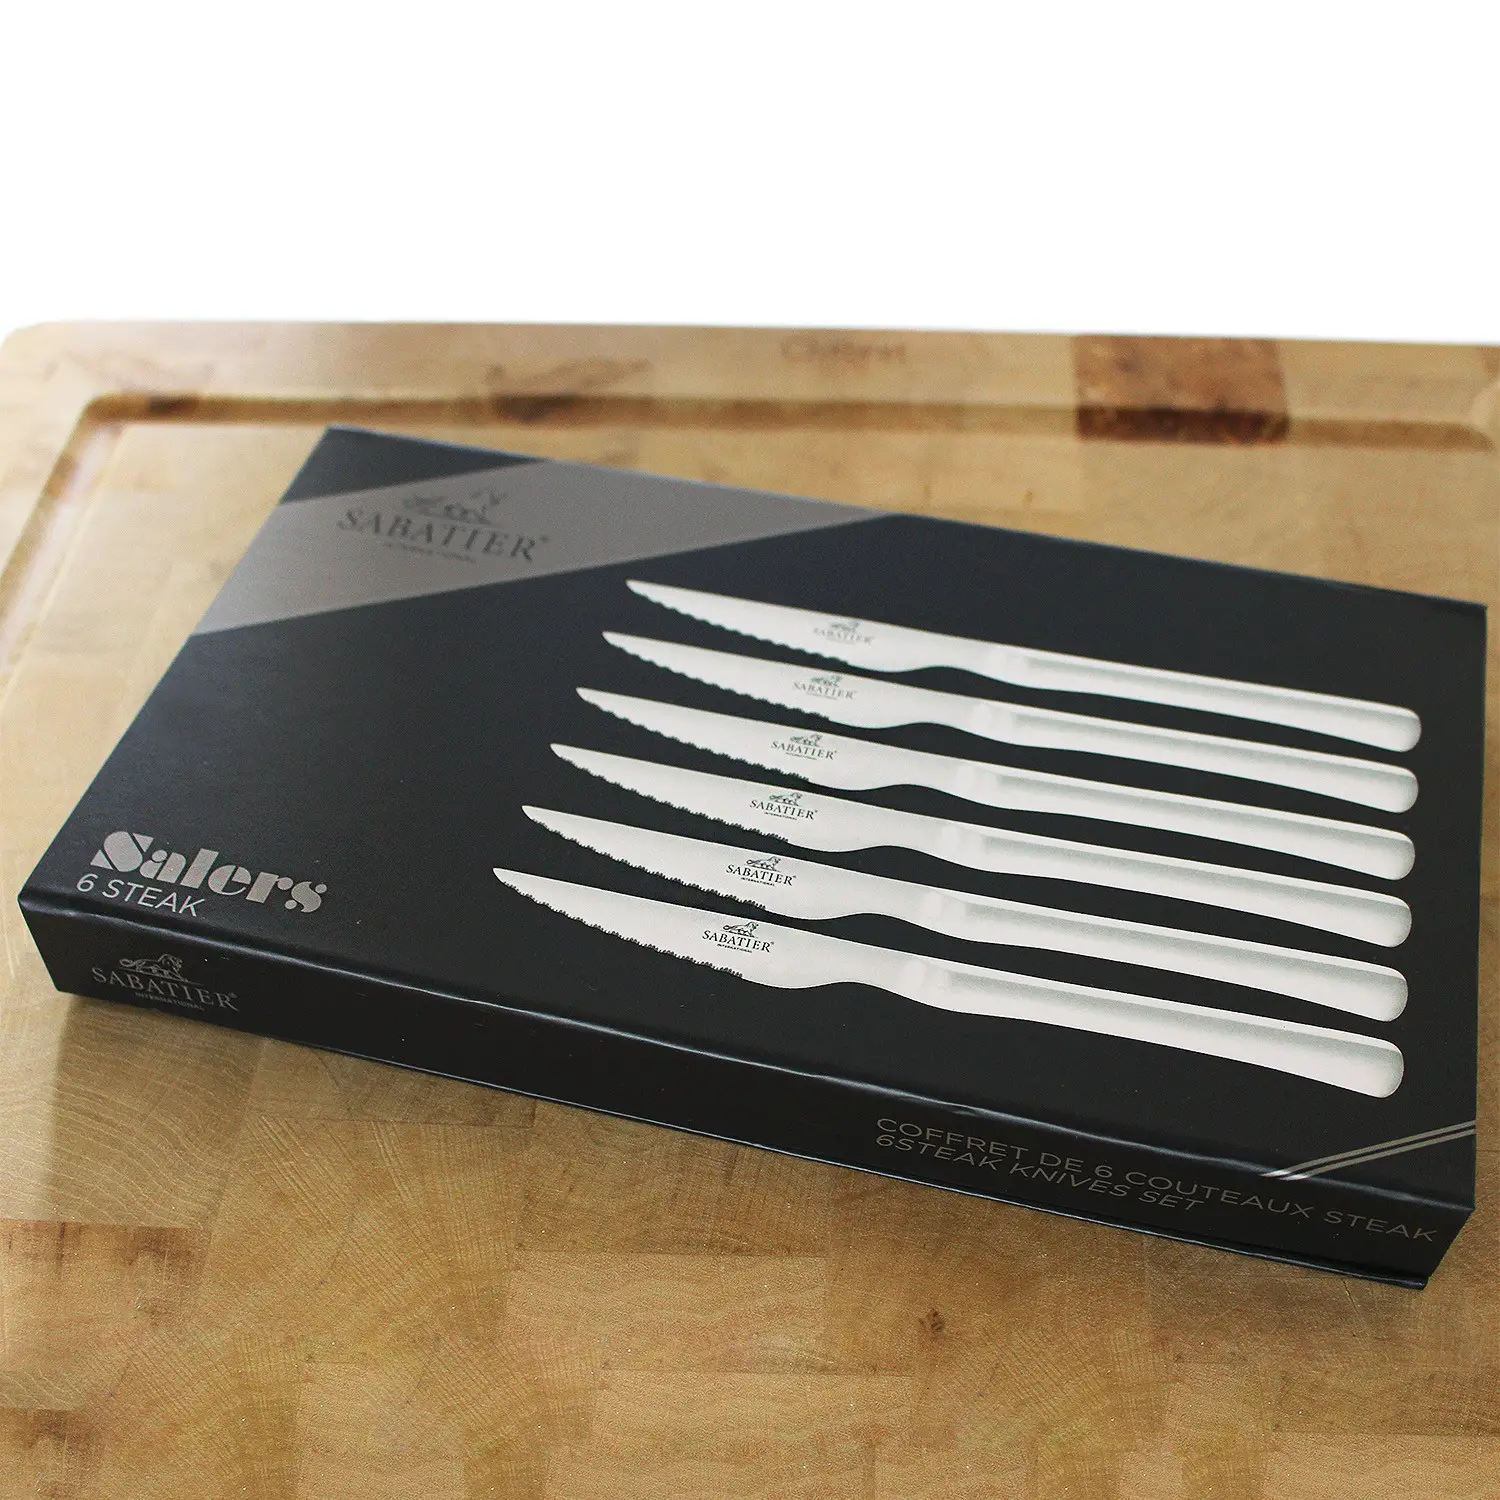 Set of 6 Steak Knives from Sabatier International